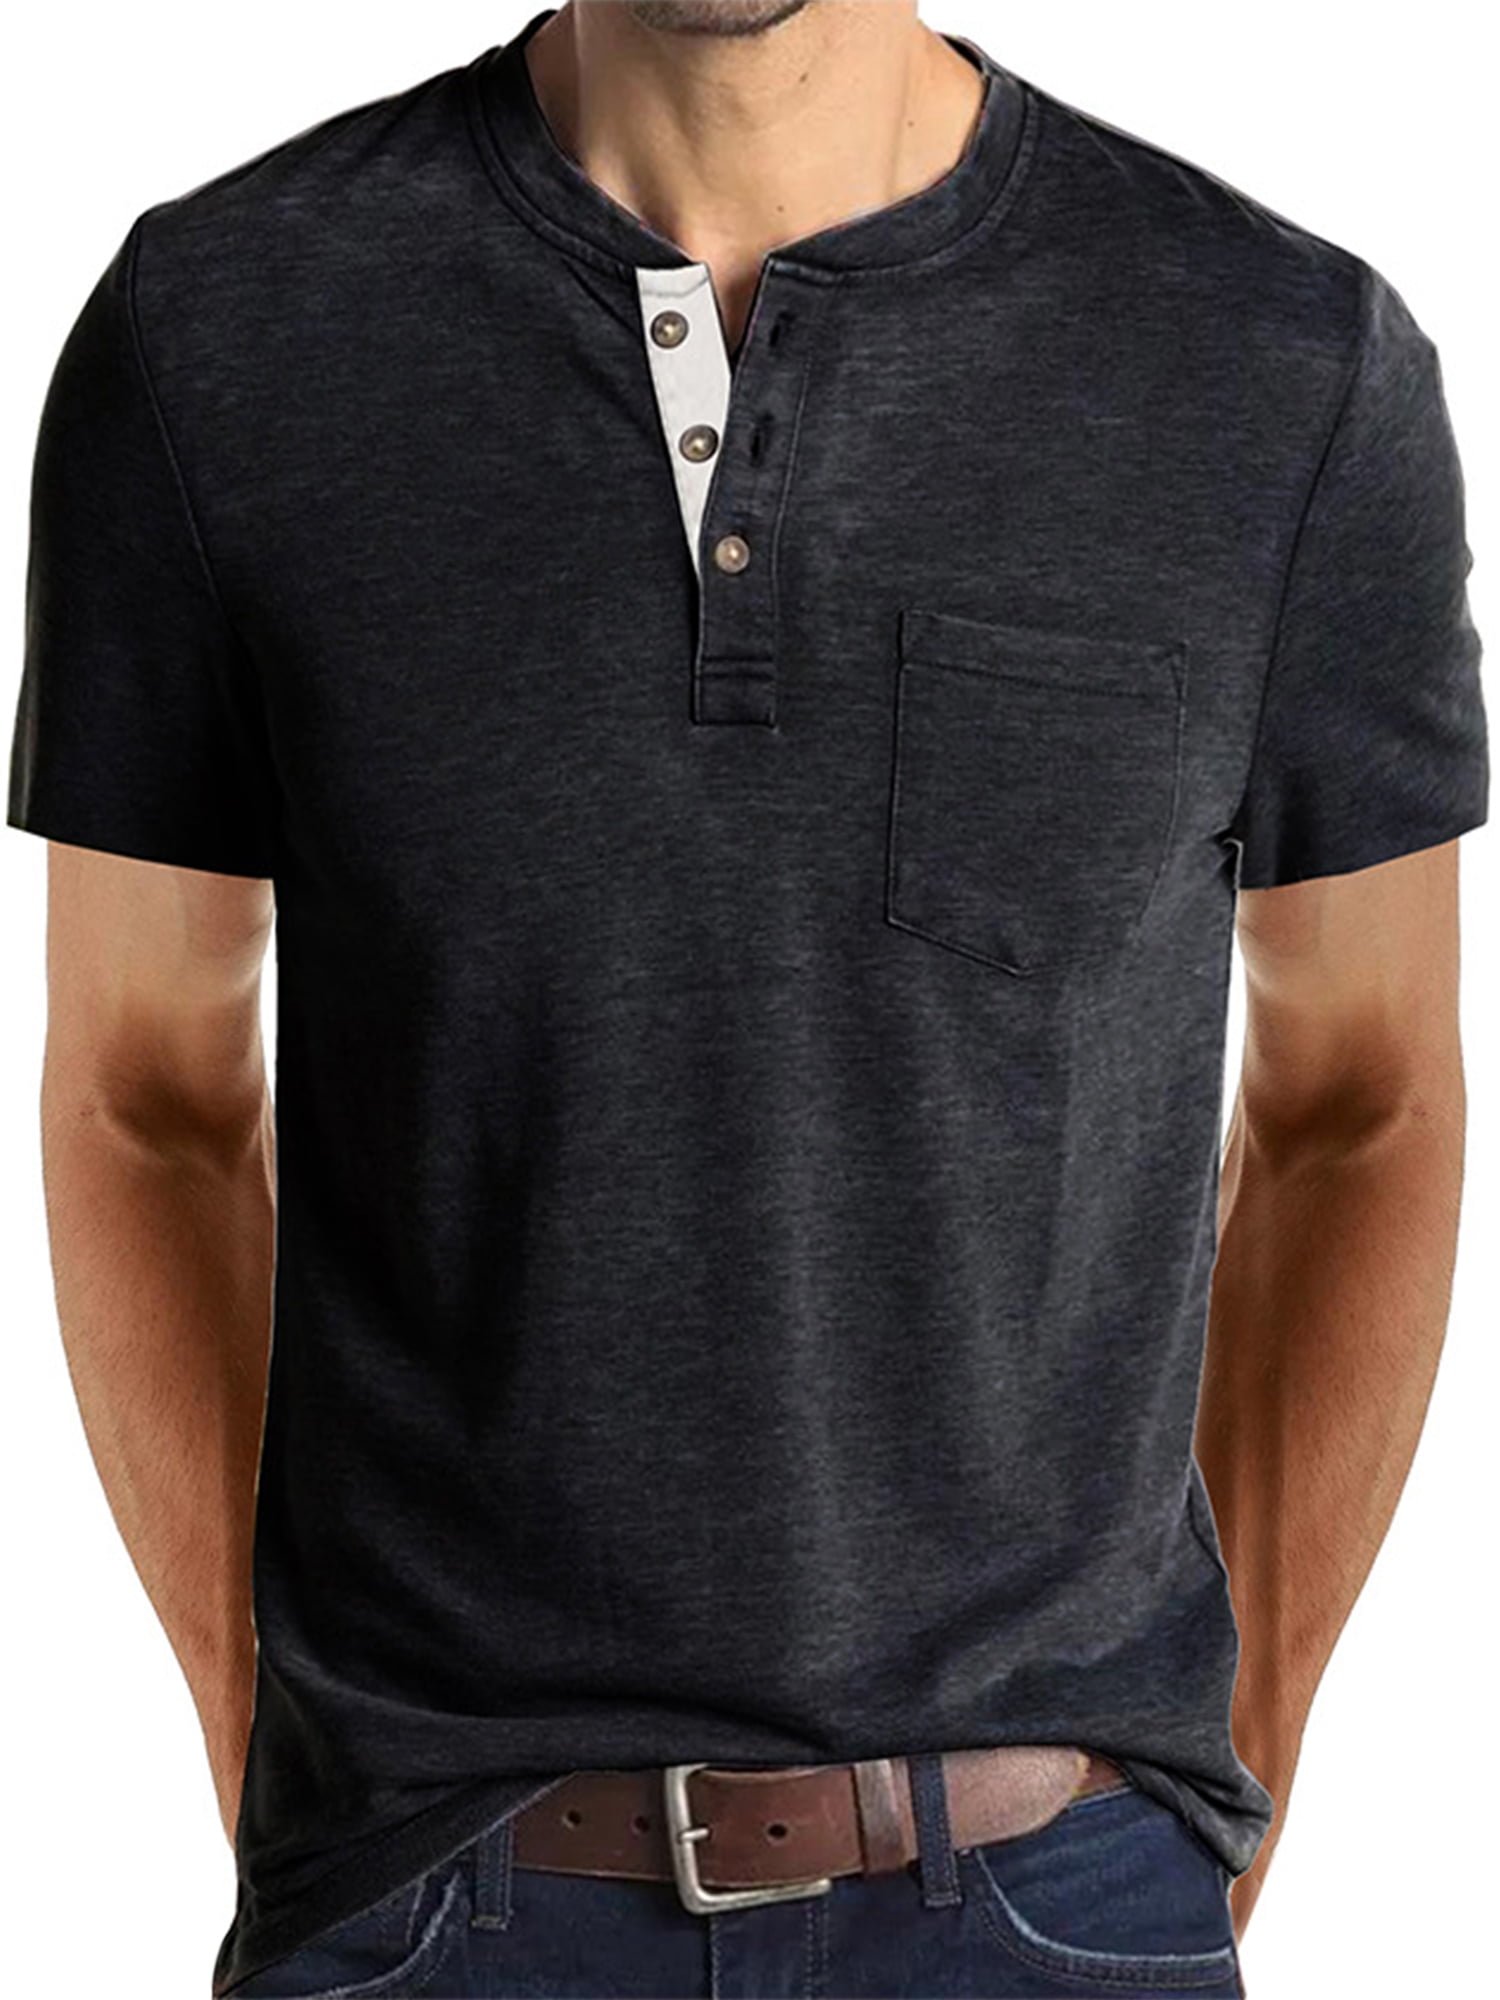 Men Summer Short Sleeve T Shirts Slim Fits Casual Solid Color V Neck Pocket Top Blouse Shirts 